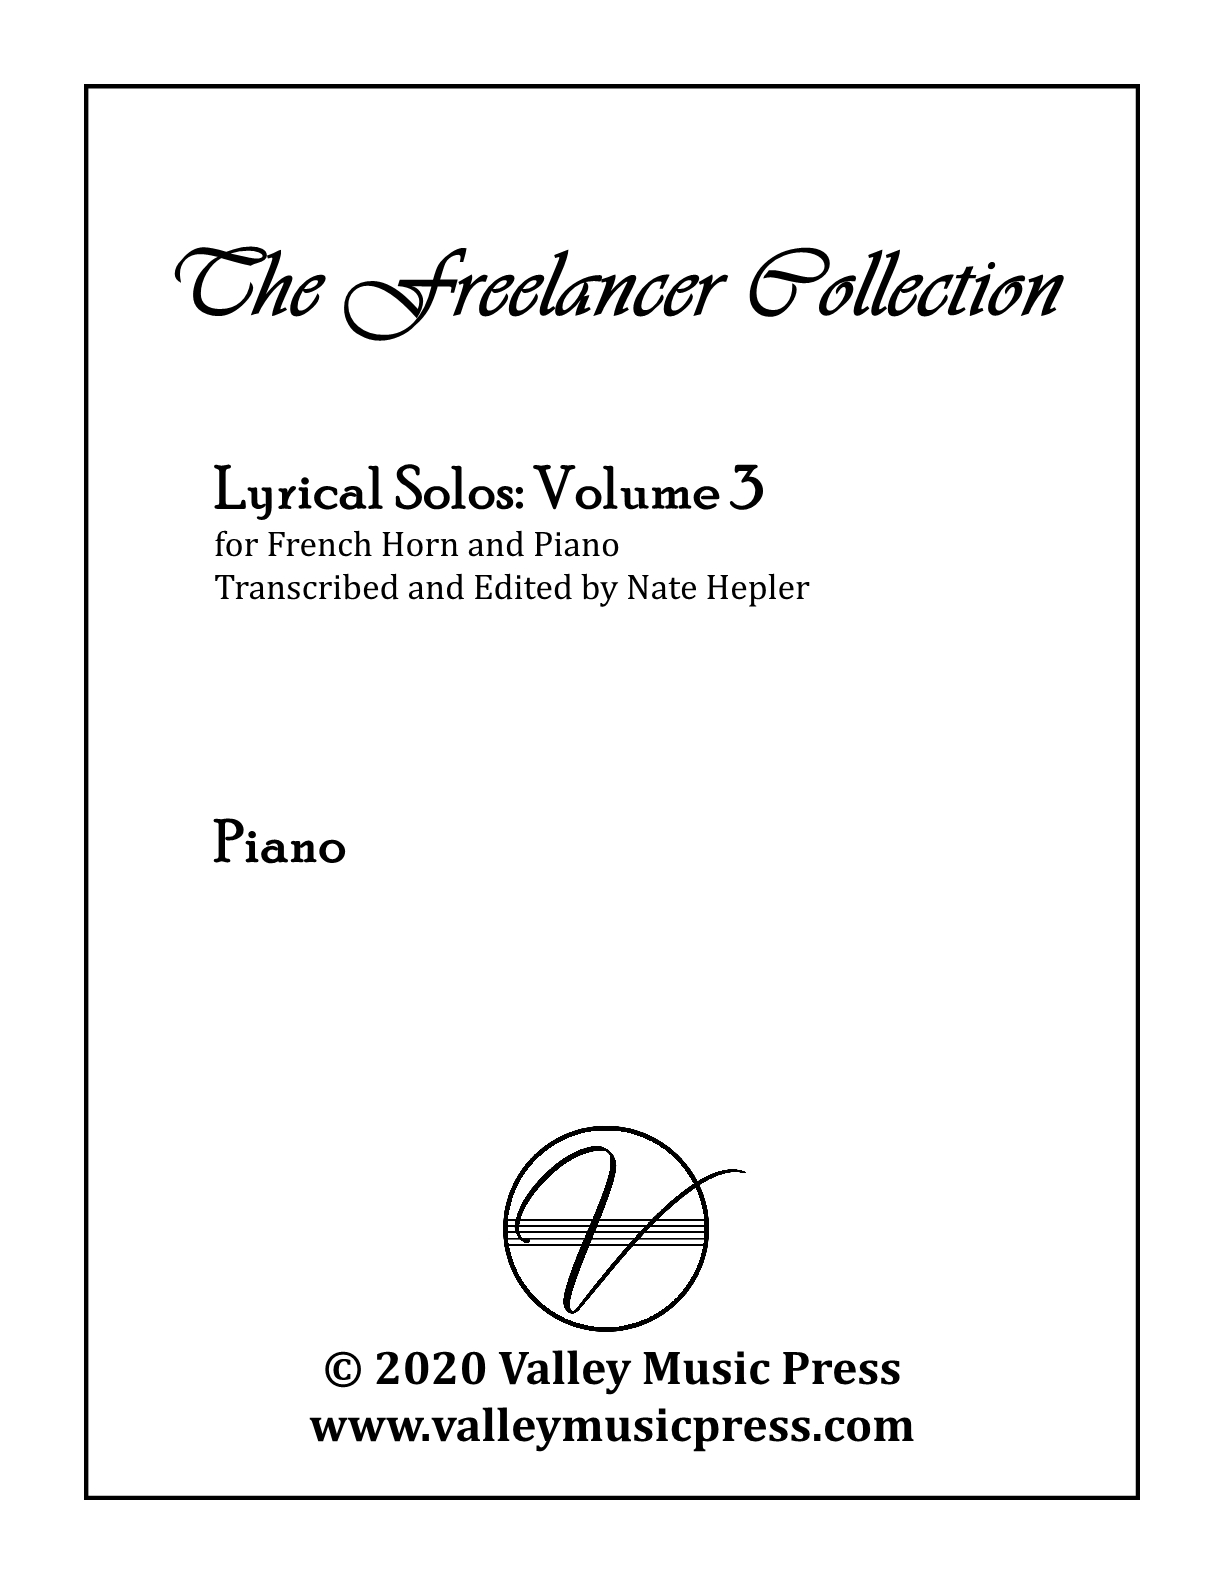 Hepler - Freelancer Collection Lyrical Solos Vol 3 (Hrn & Piano)